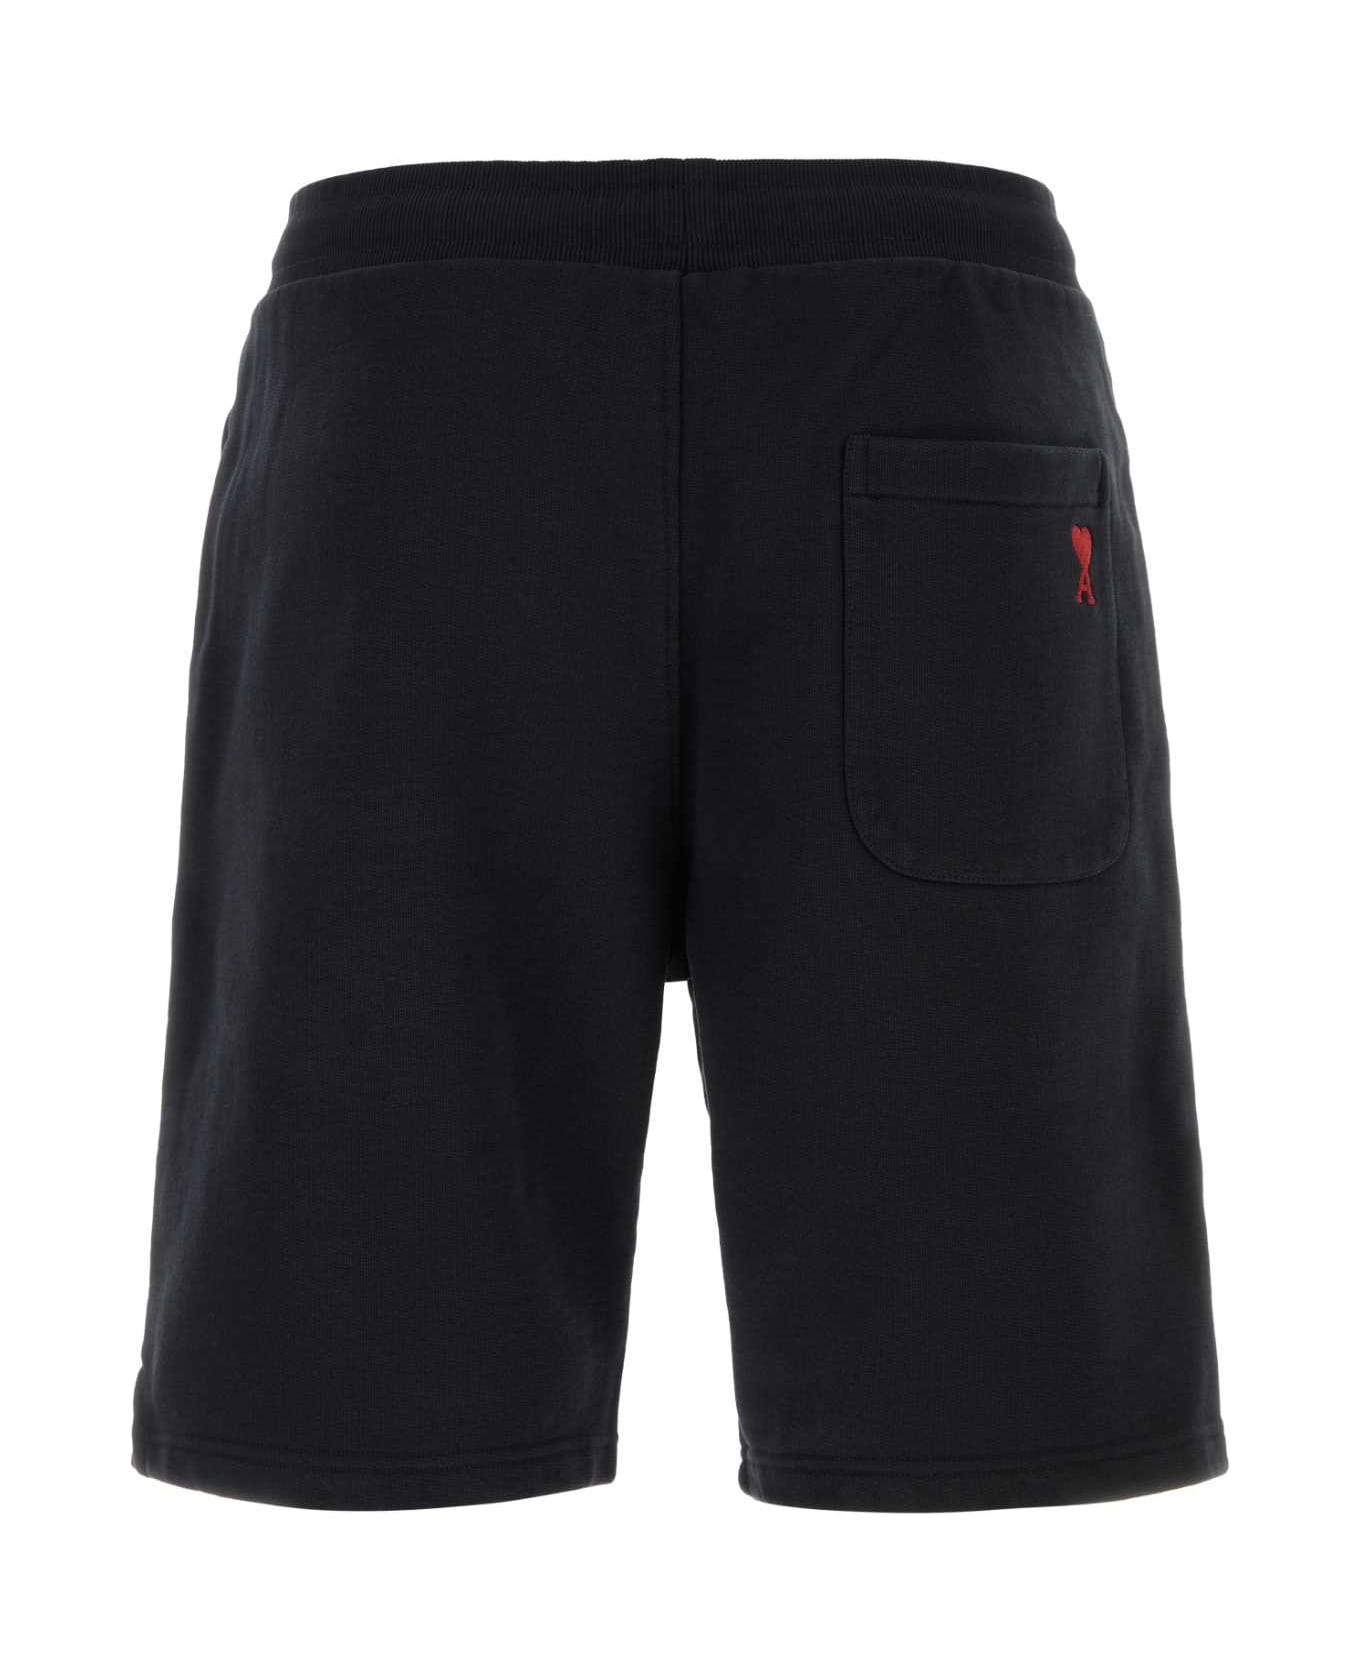 Ami Alexandre Mattiussi Black Stretch Cotton Bermuda Shorts - Black name:468